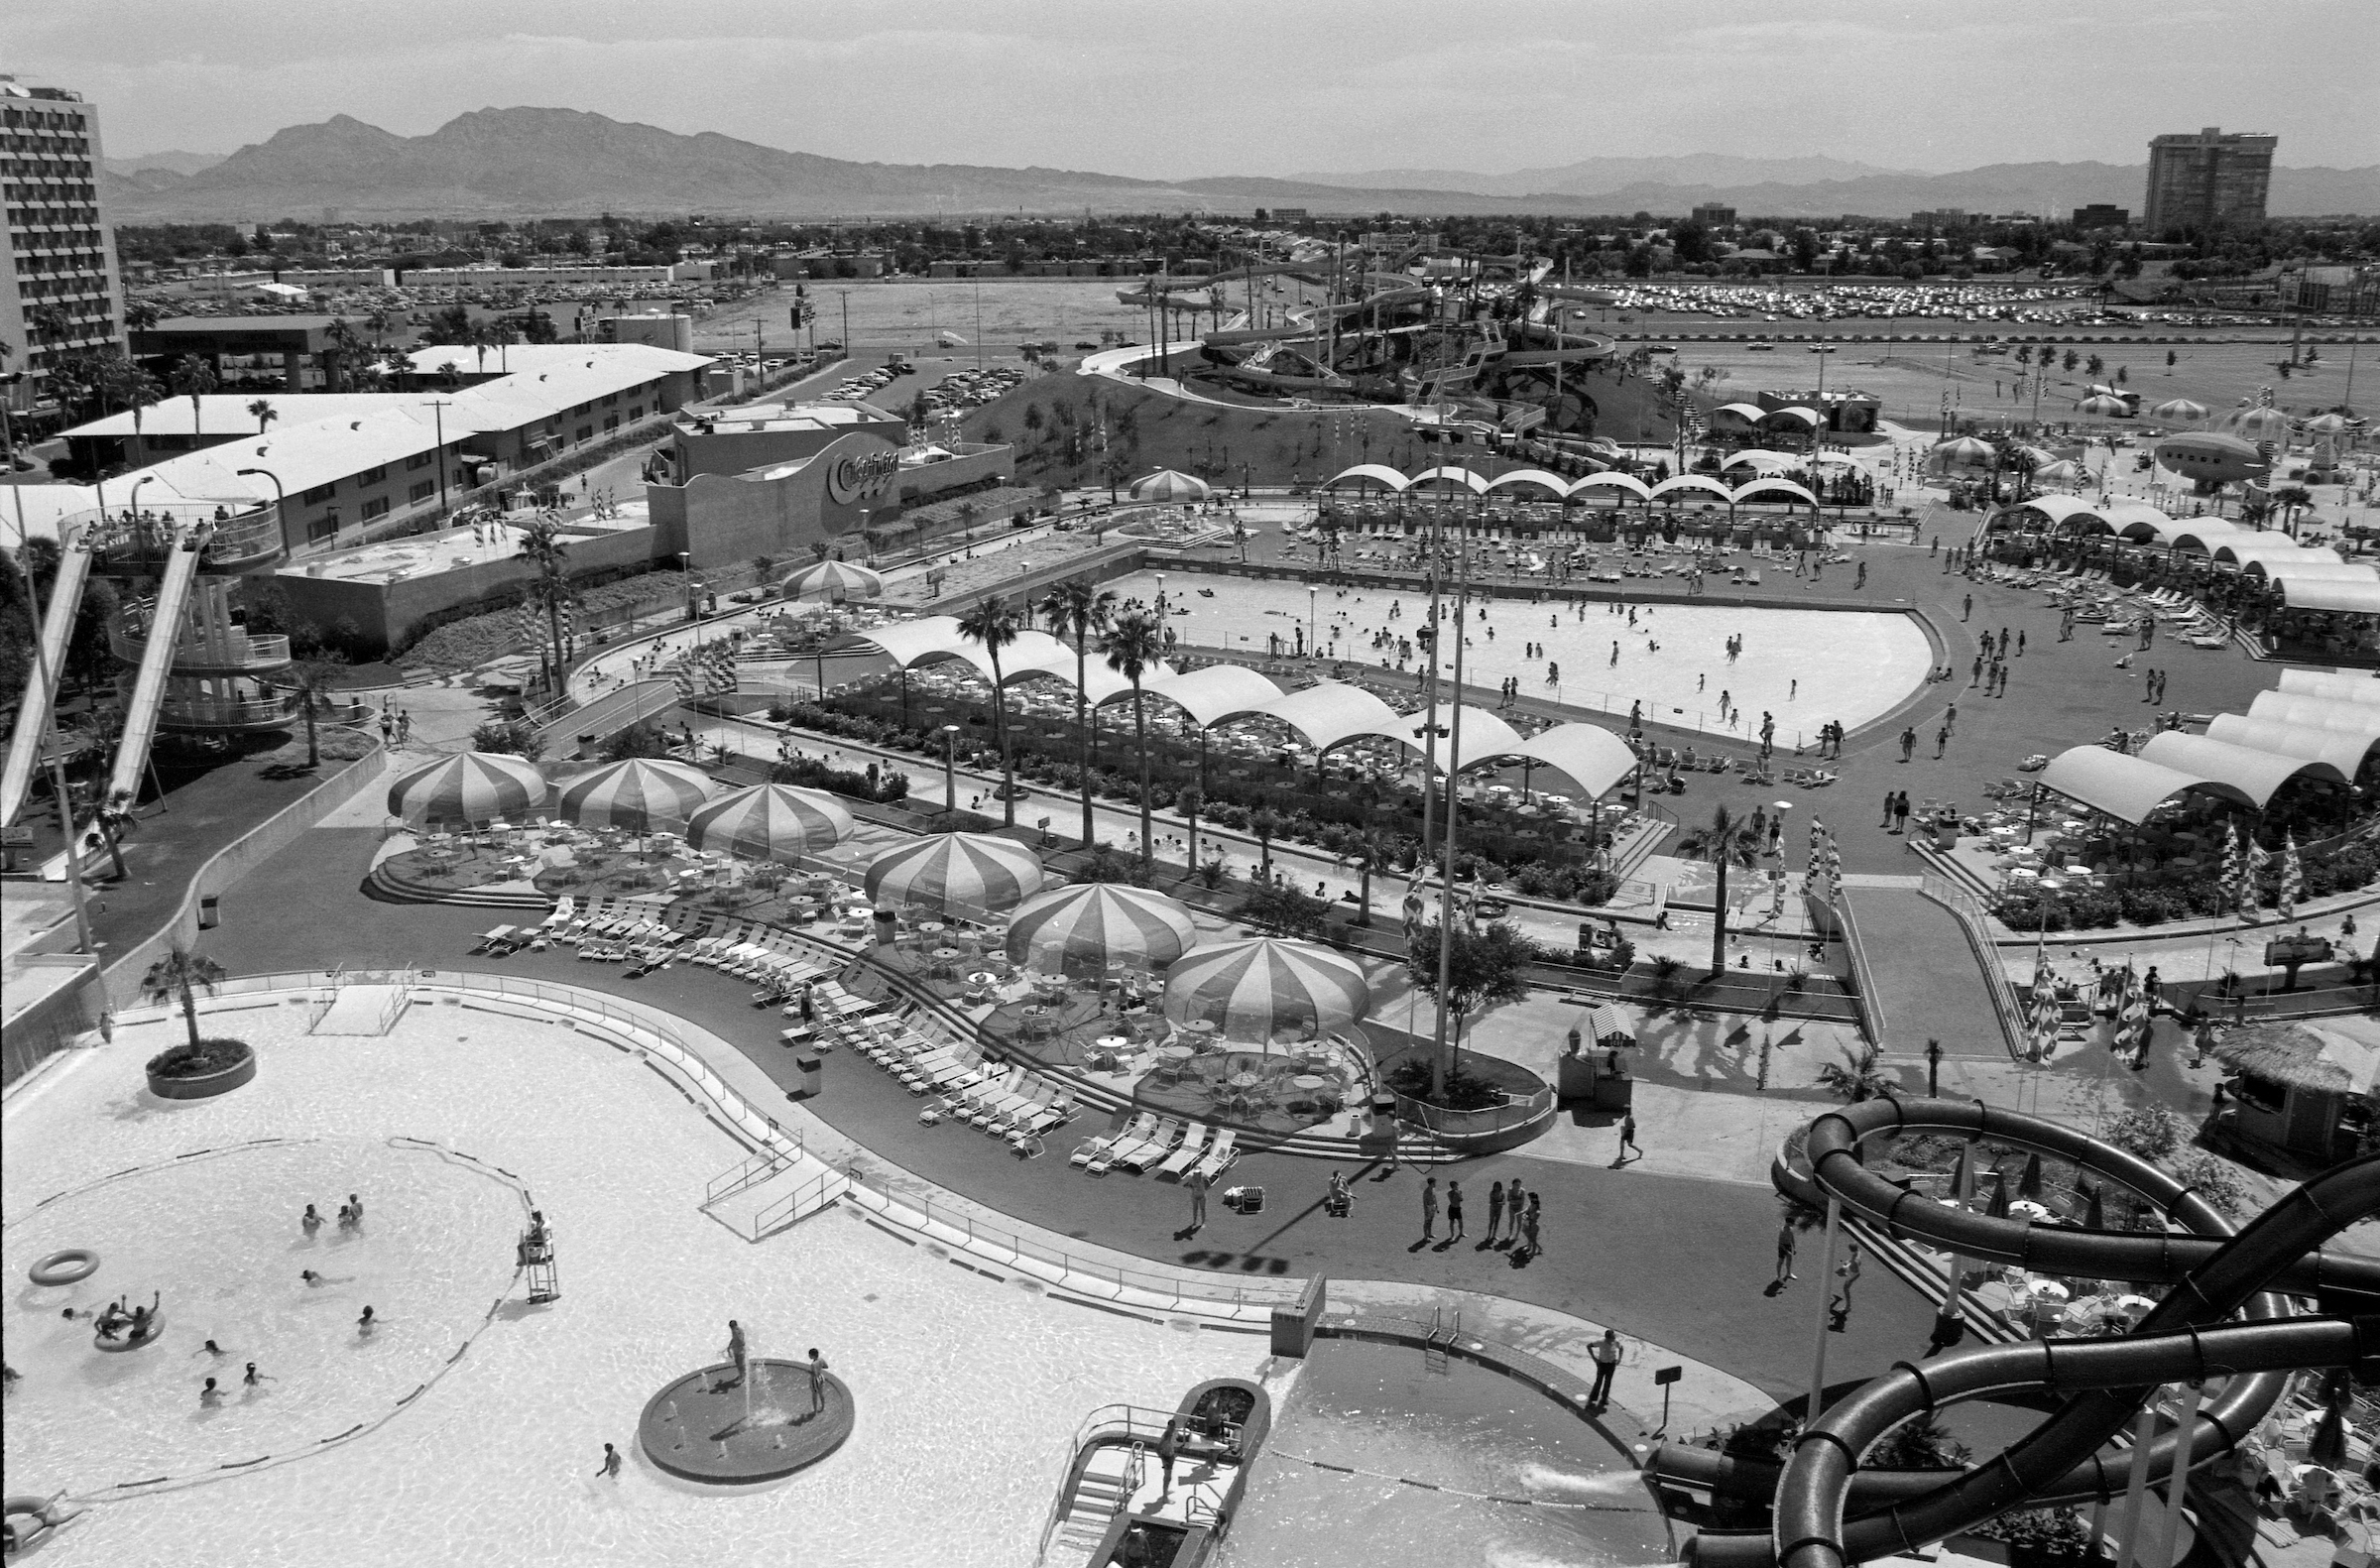 PHOTOS: Take a look back at the original Wet 'n Wild on Las Vegas Strip